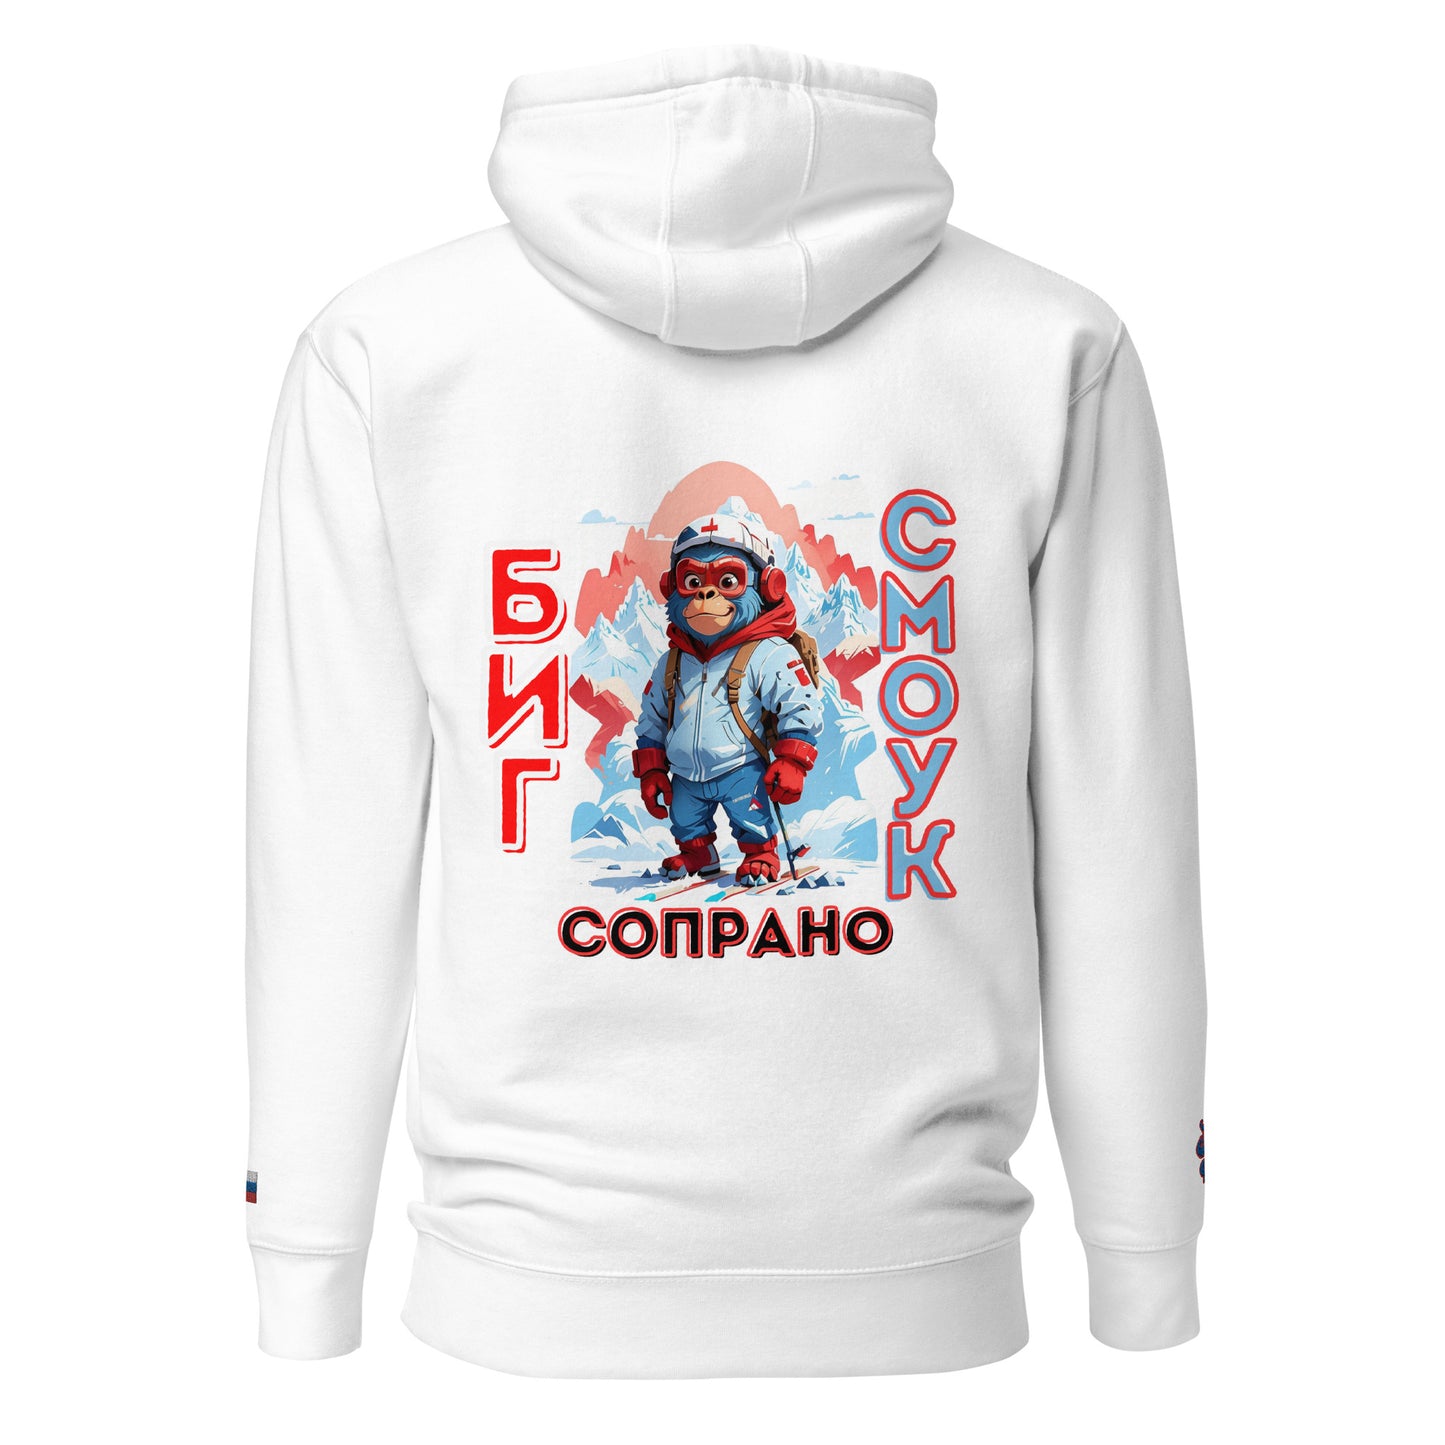 BigSmoke Soprano Clothing: BigSmoke Soprano Worldwide Collection: Всё нормально Unisex Hoodie (Russia Edition)